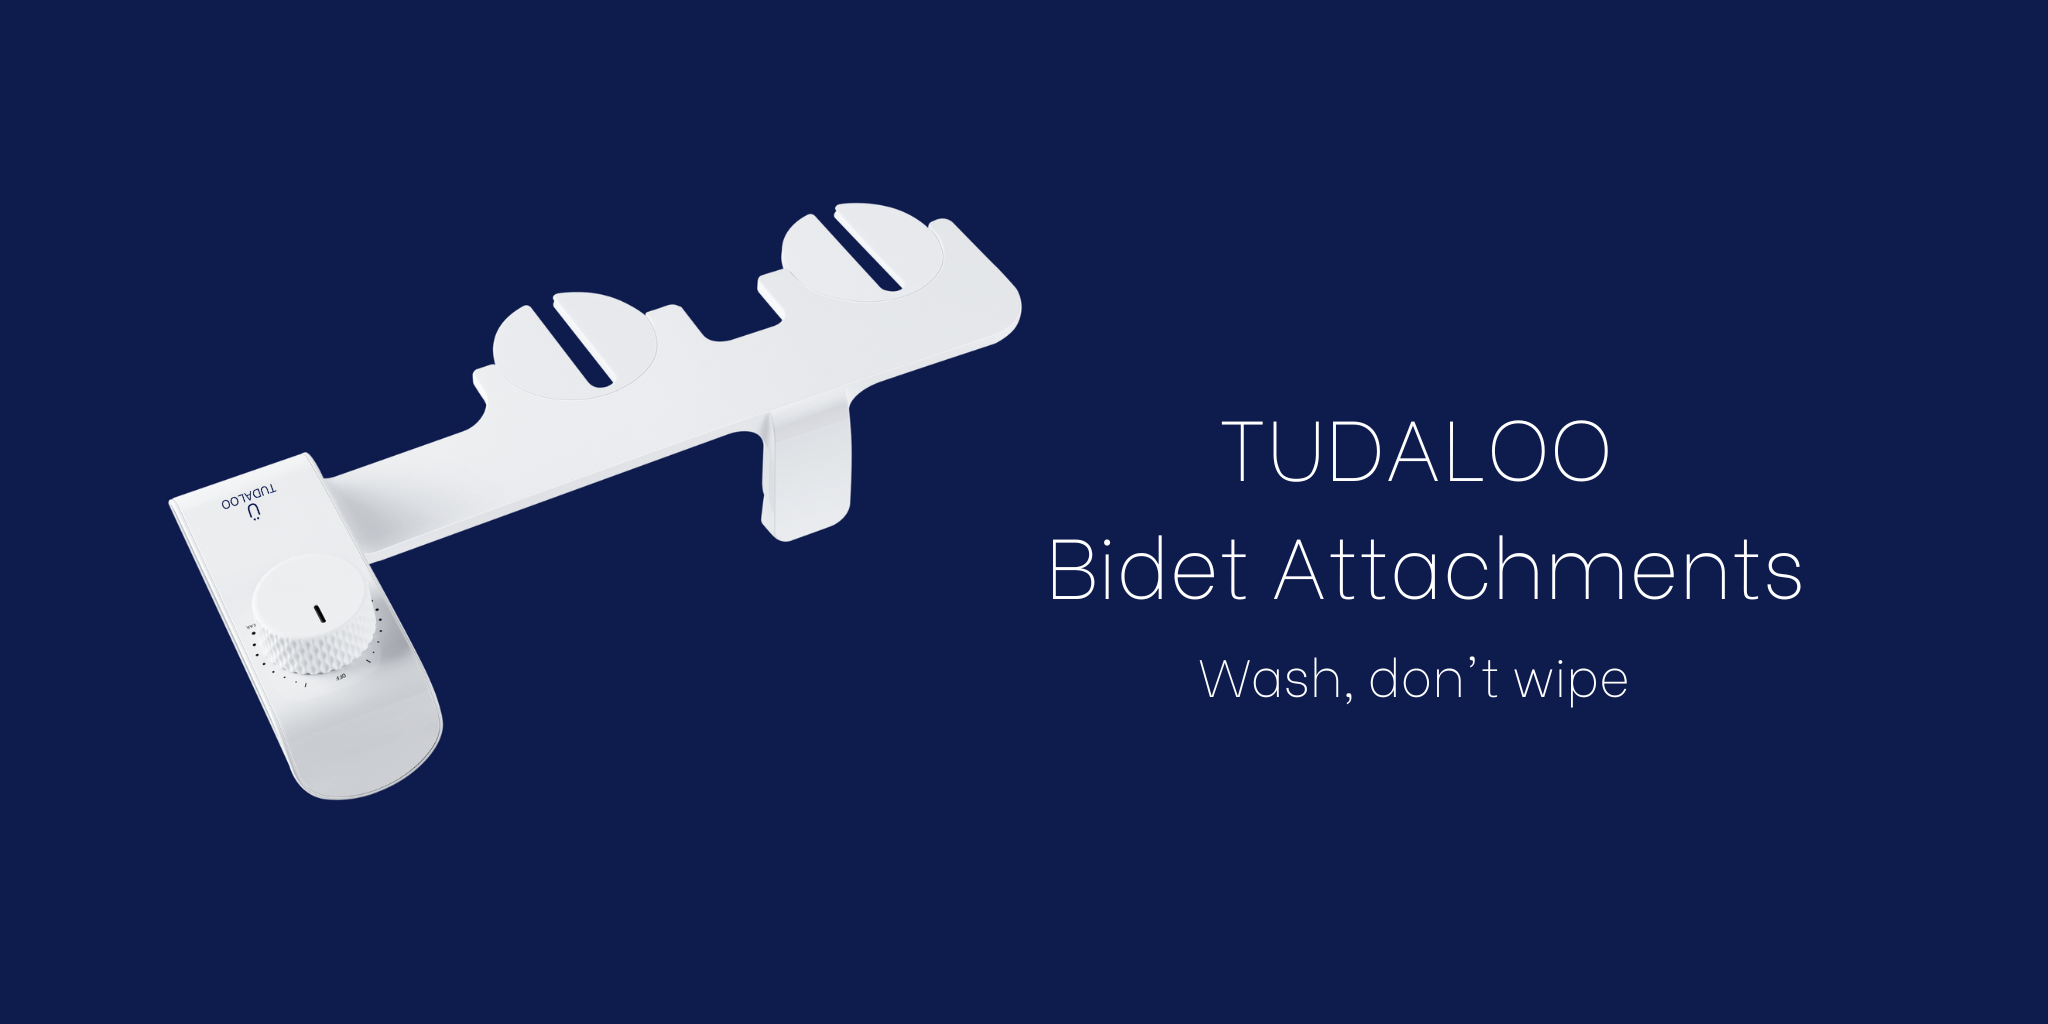 Tudaloo Bidet Attachments. Wash, Don't wipe